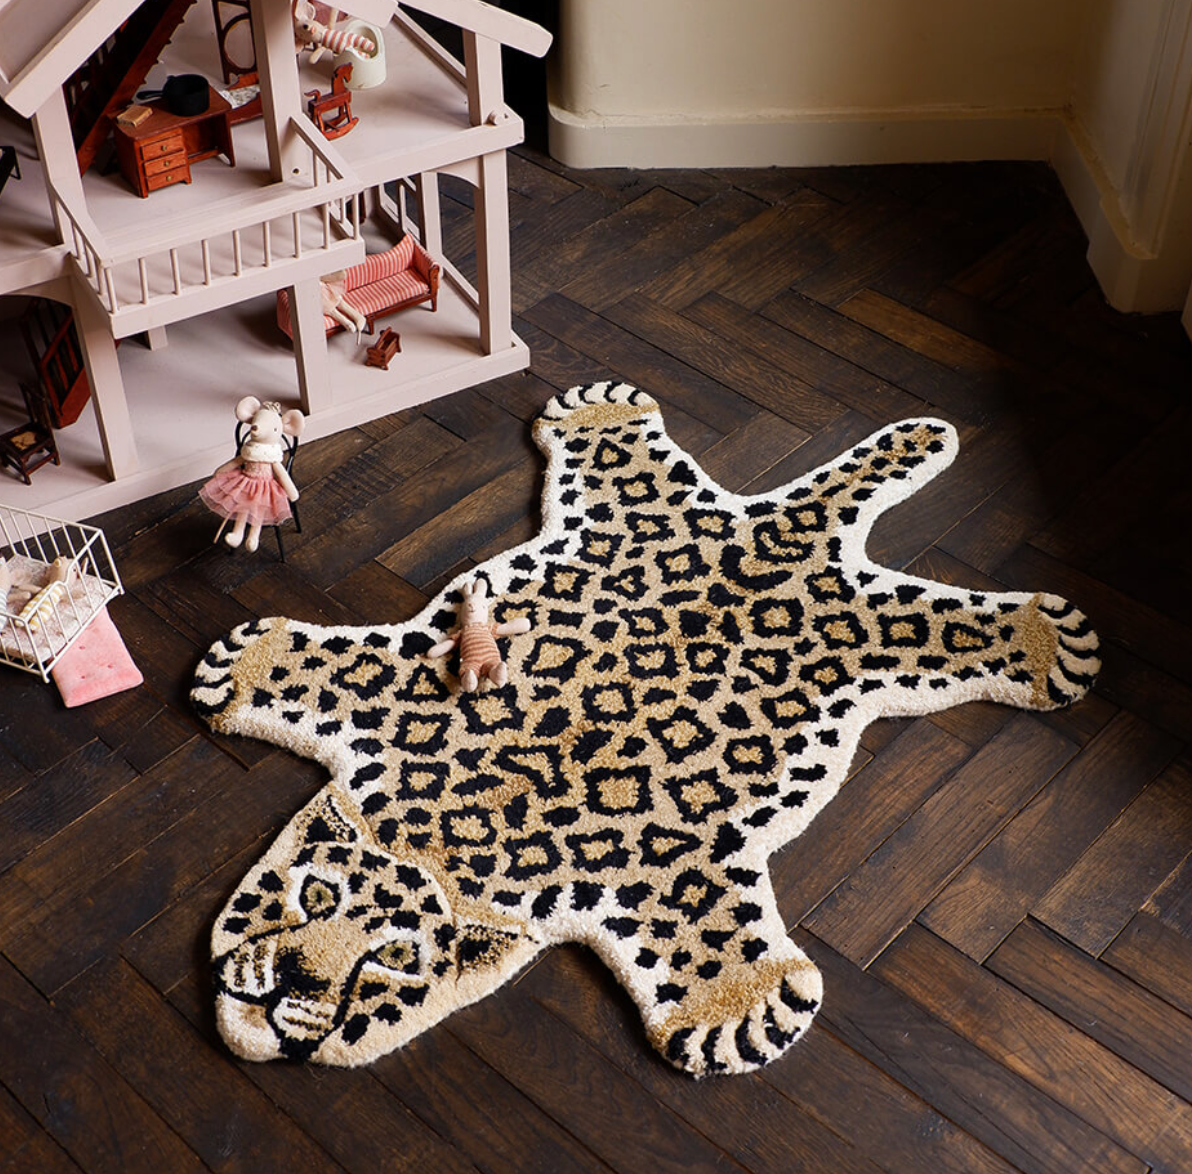 Leopard rug ( both sizes)